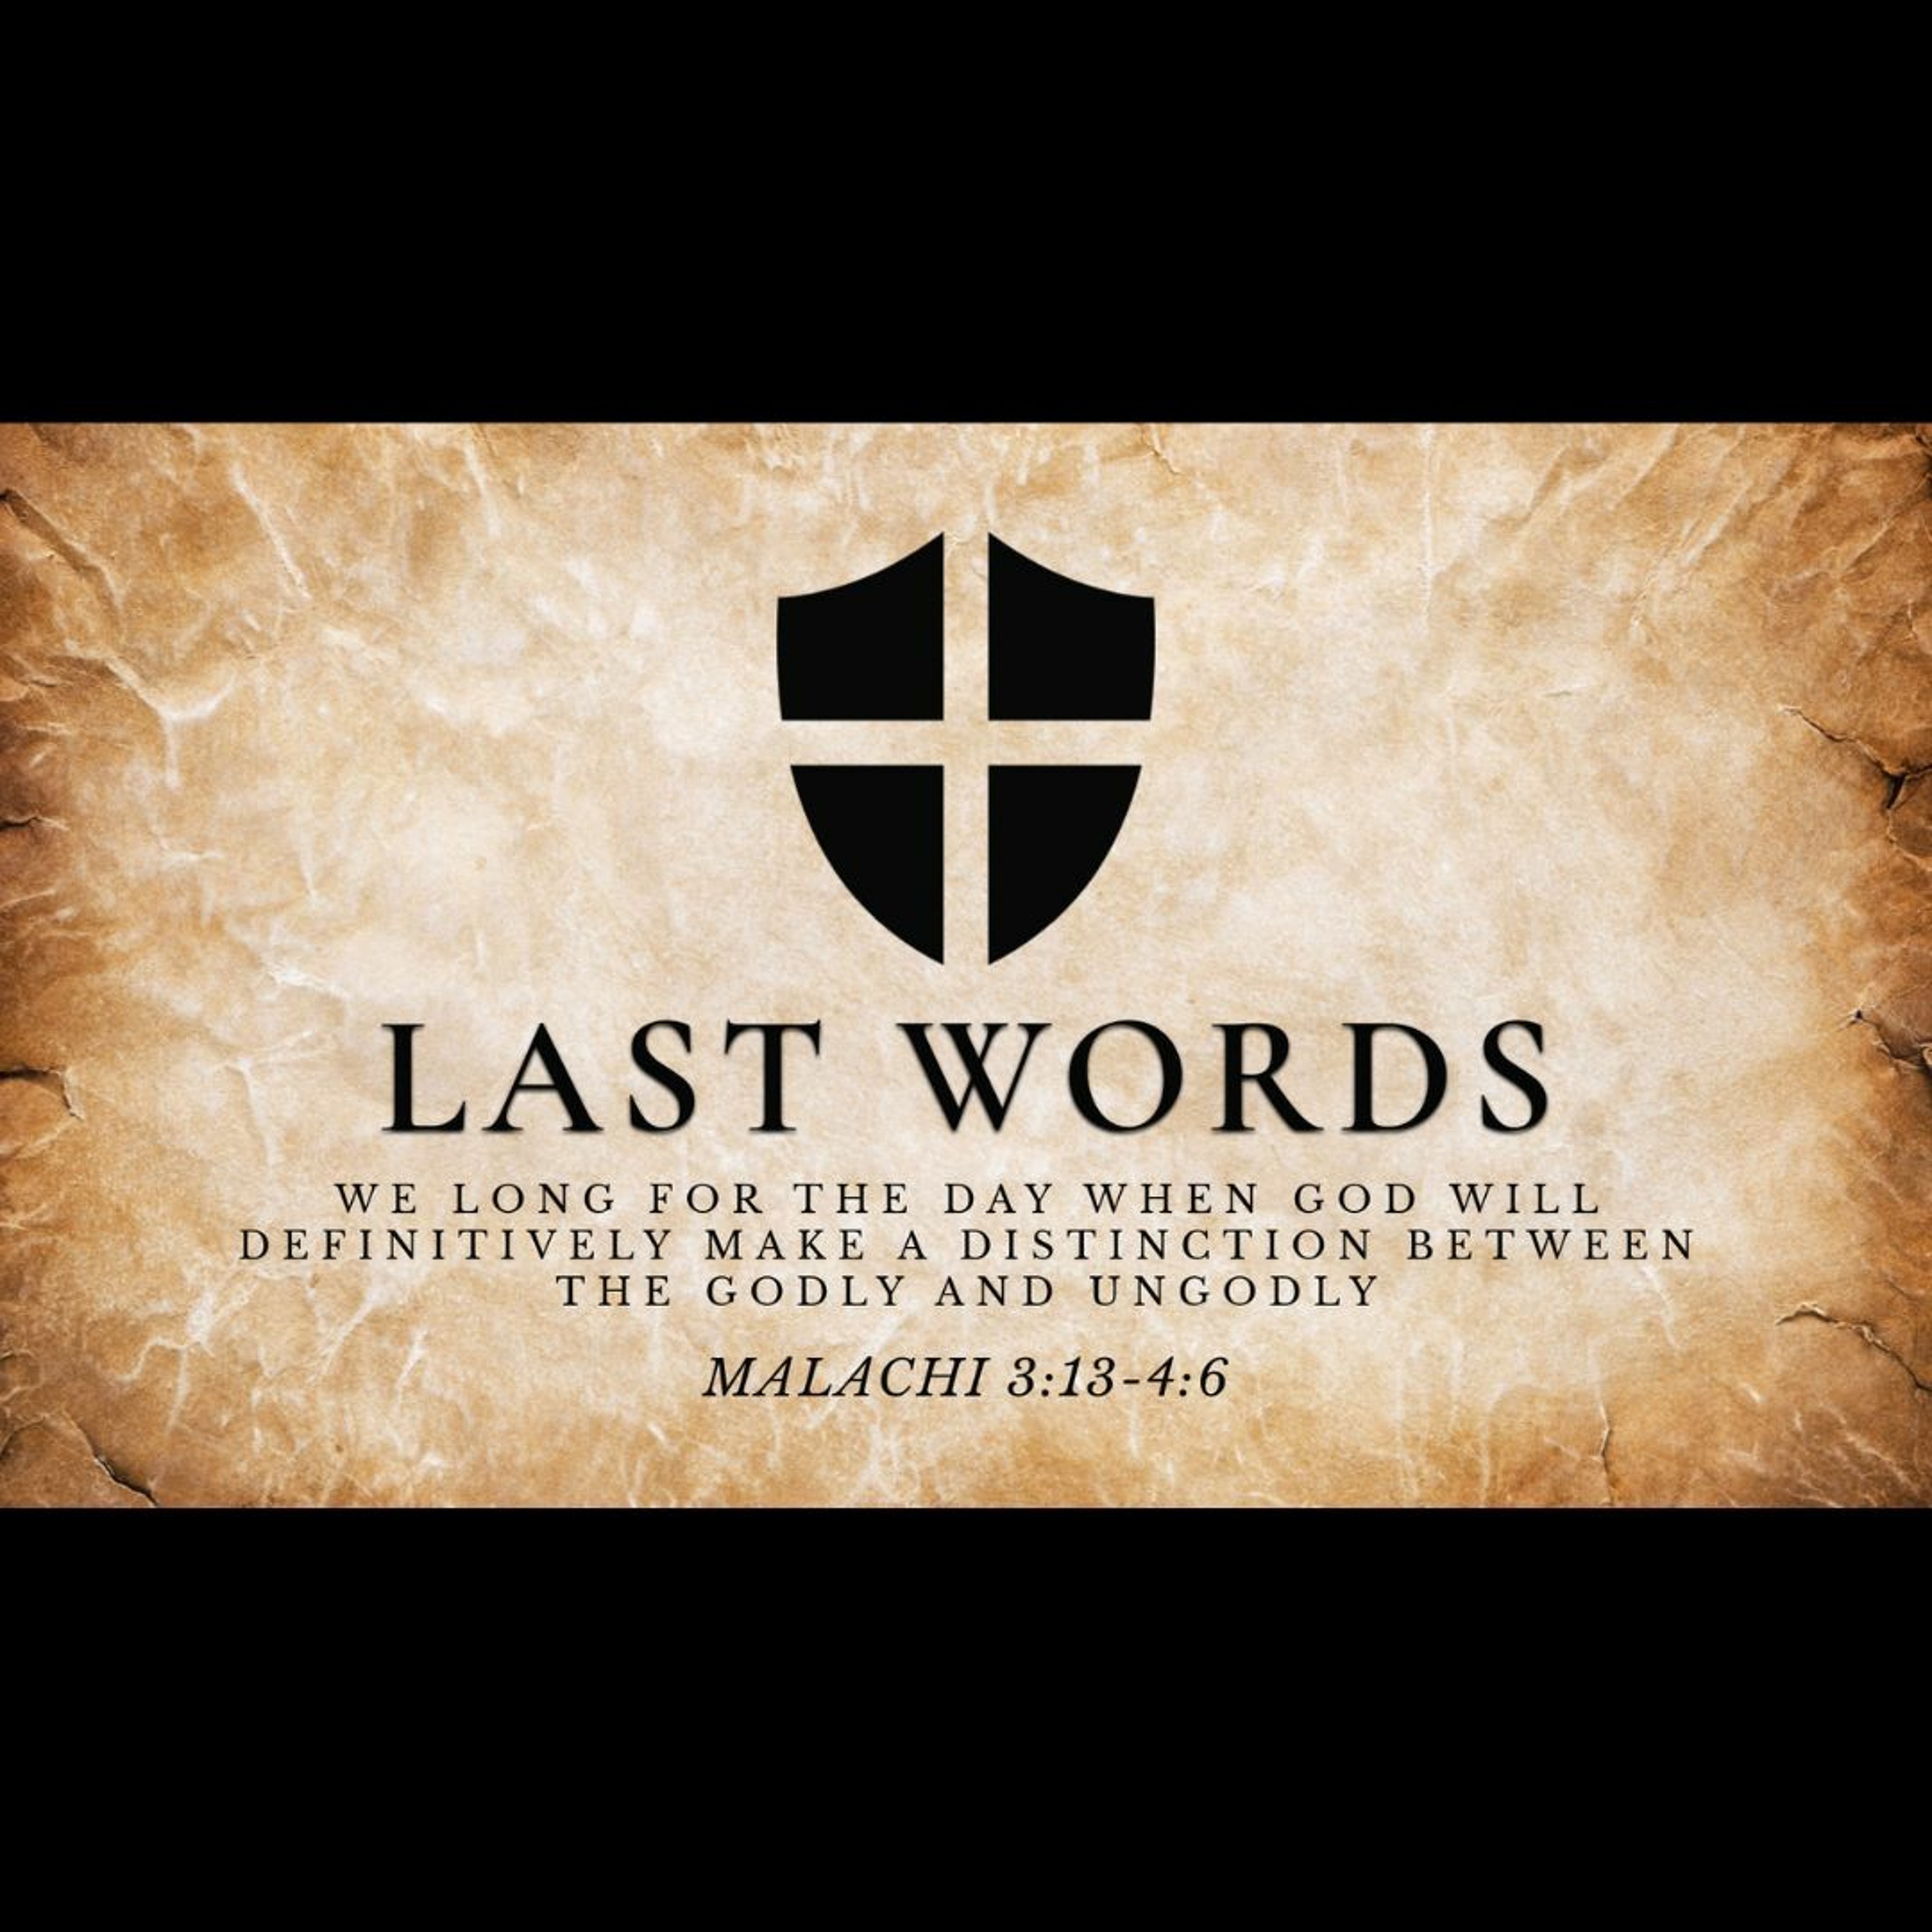 Last Words (Malachi 3:13-4:6)